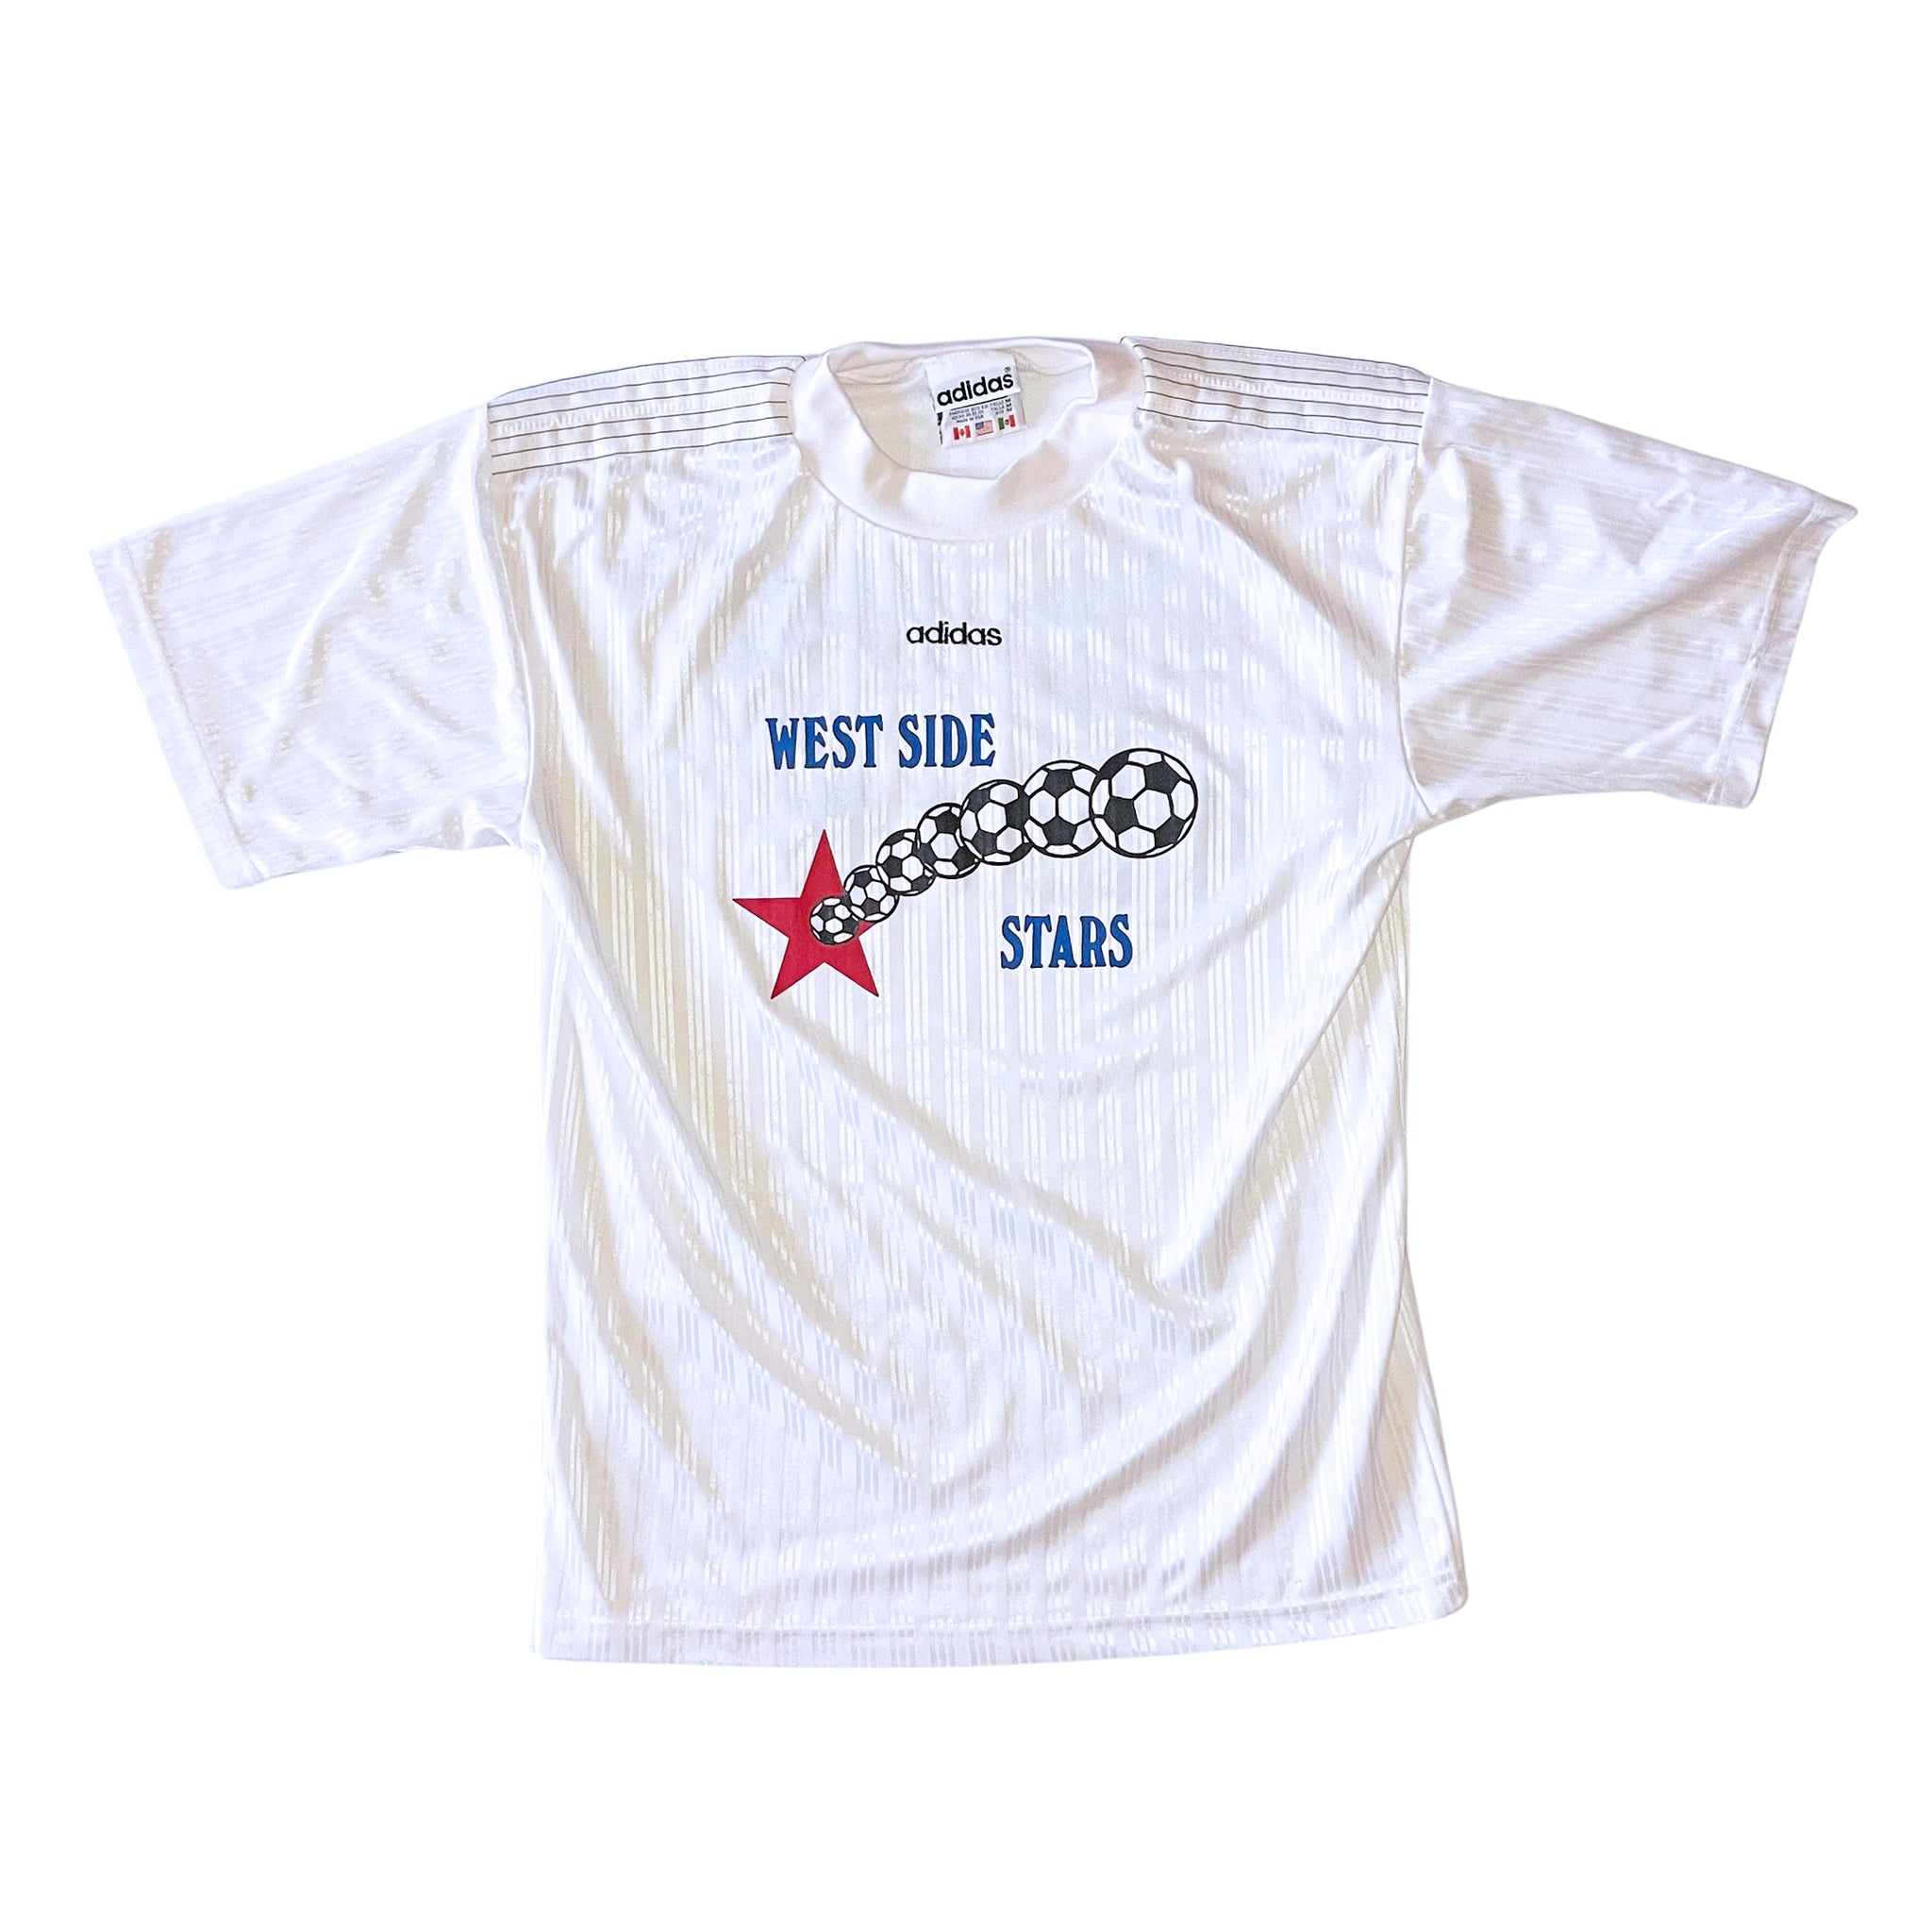 Adidas West Side Stars Jersey - L